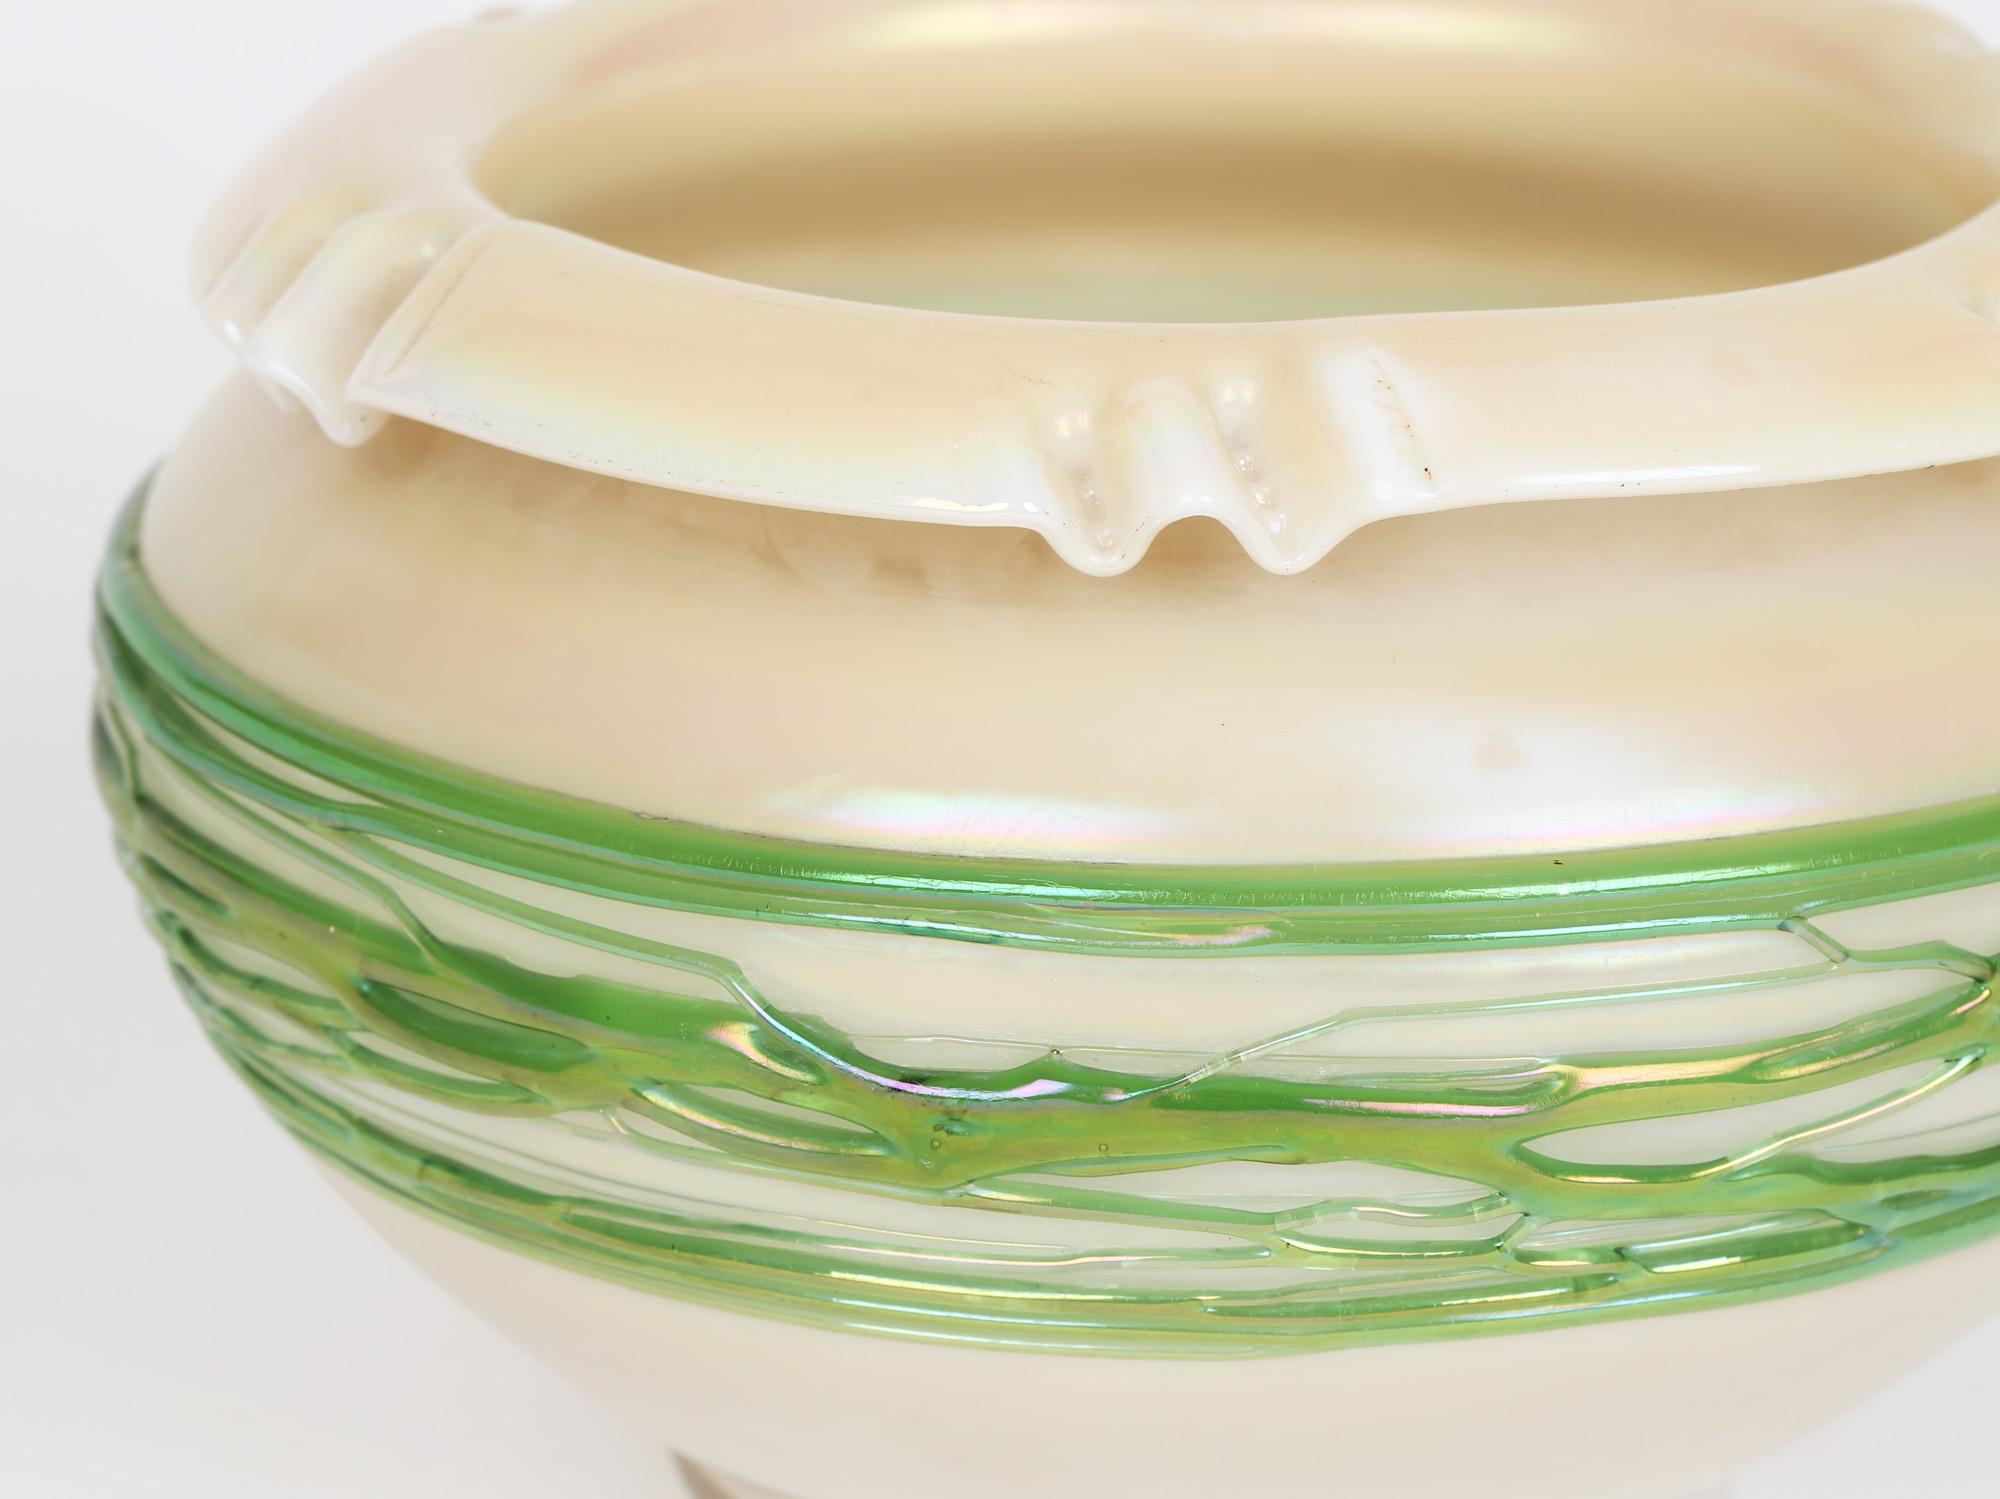 Palme König Art Nouveau Green Trailed Thread Design Iridescent Glass Bowl For Sale 5